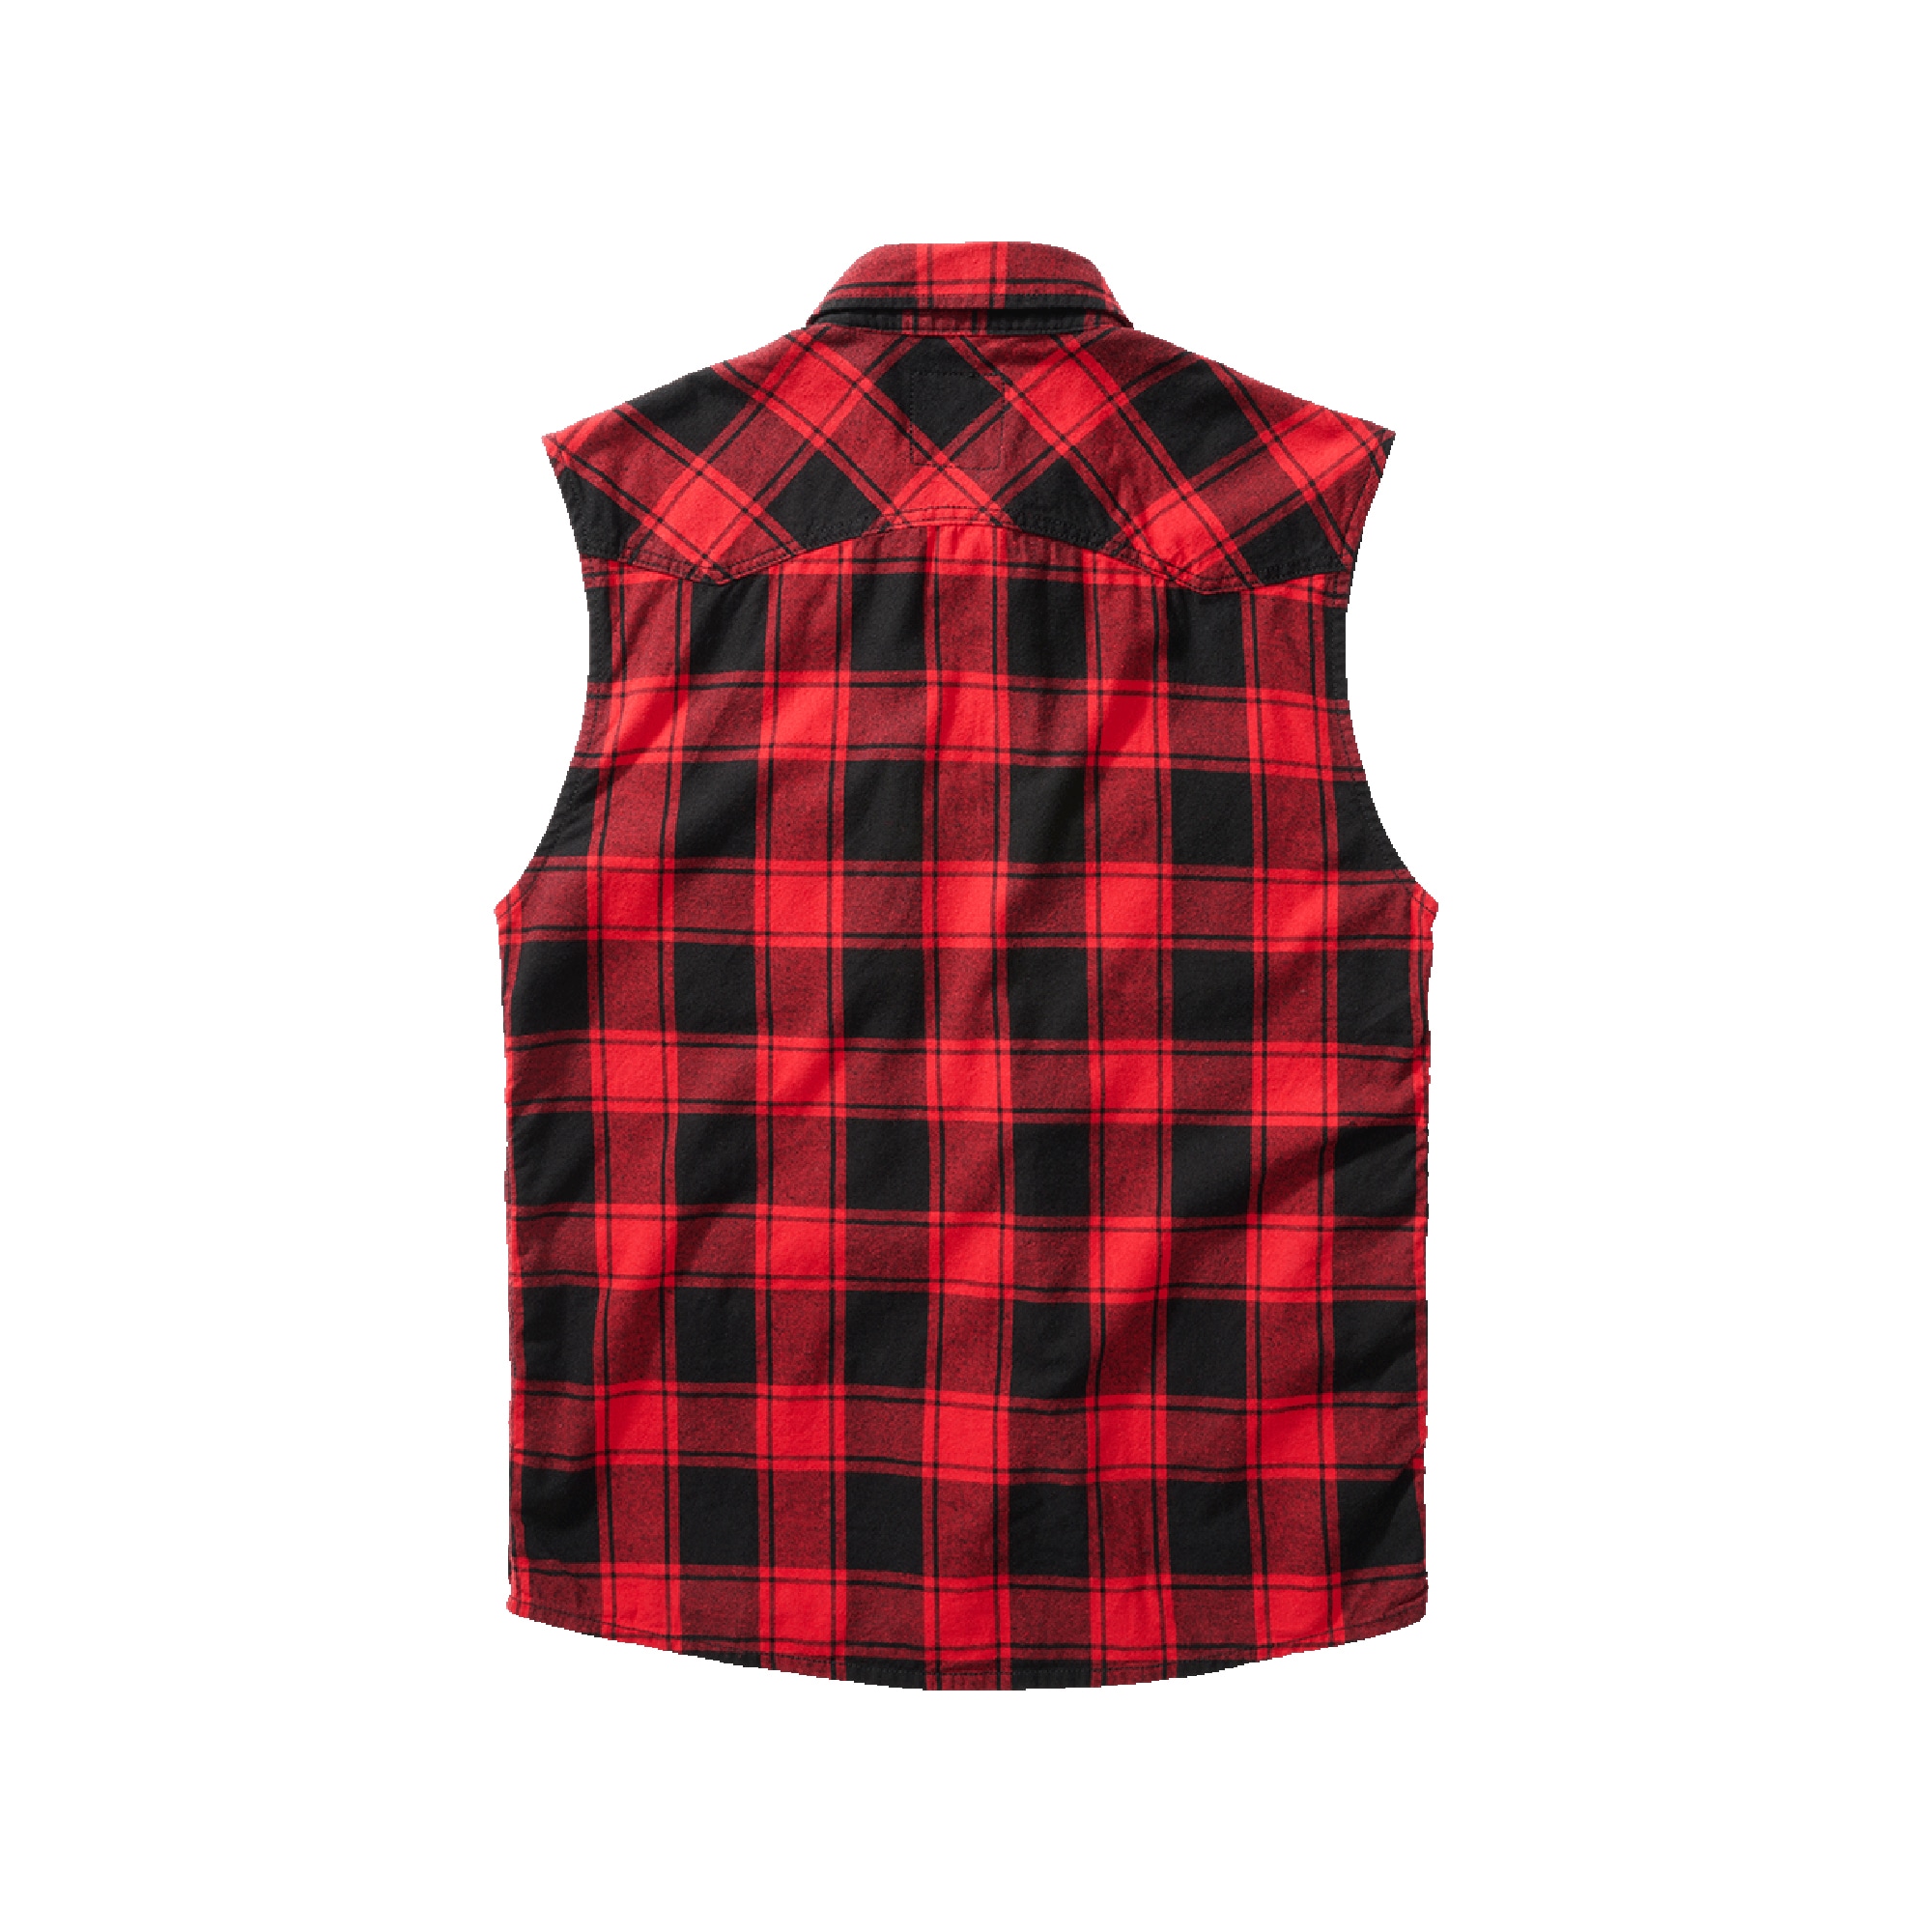 Purchase the Brandit Check ASMC by red/black Sleeveless Shirt